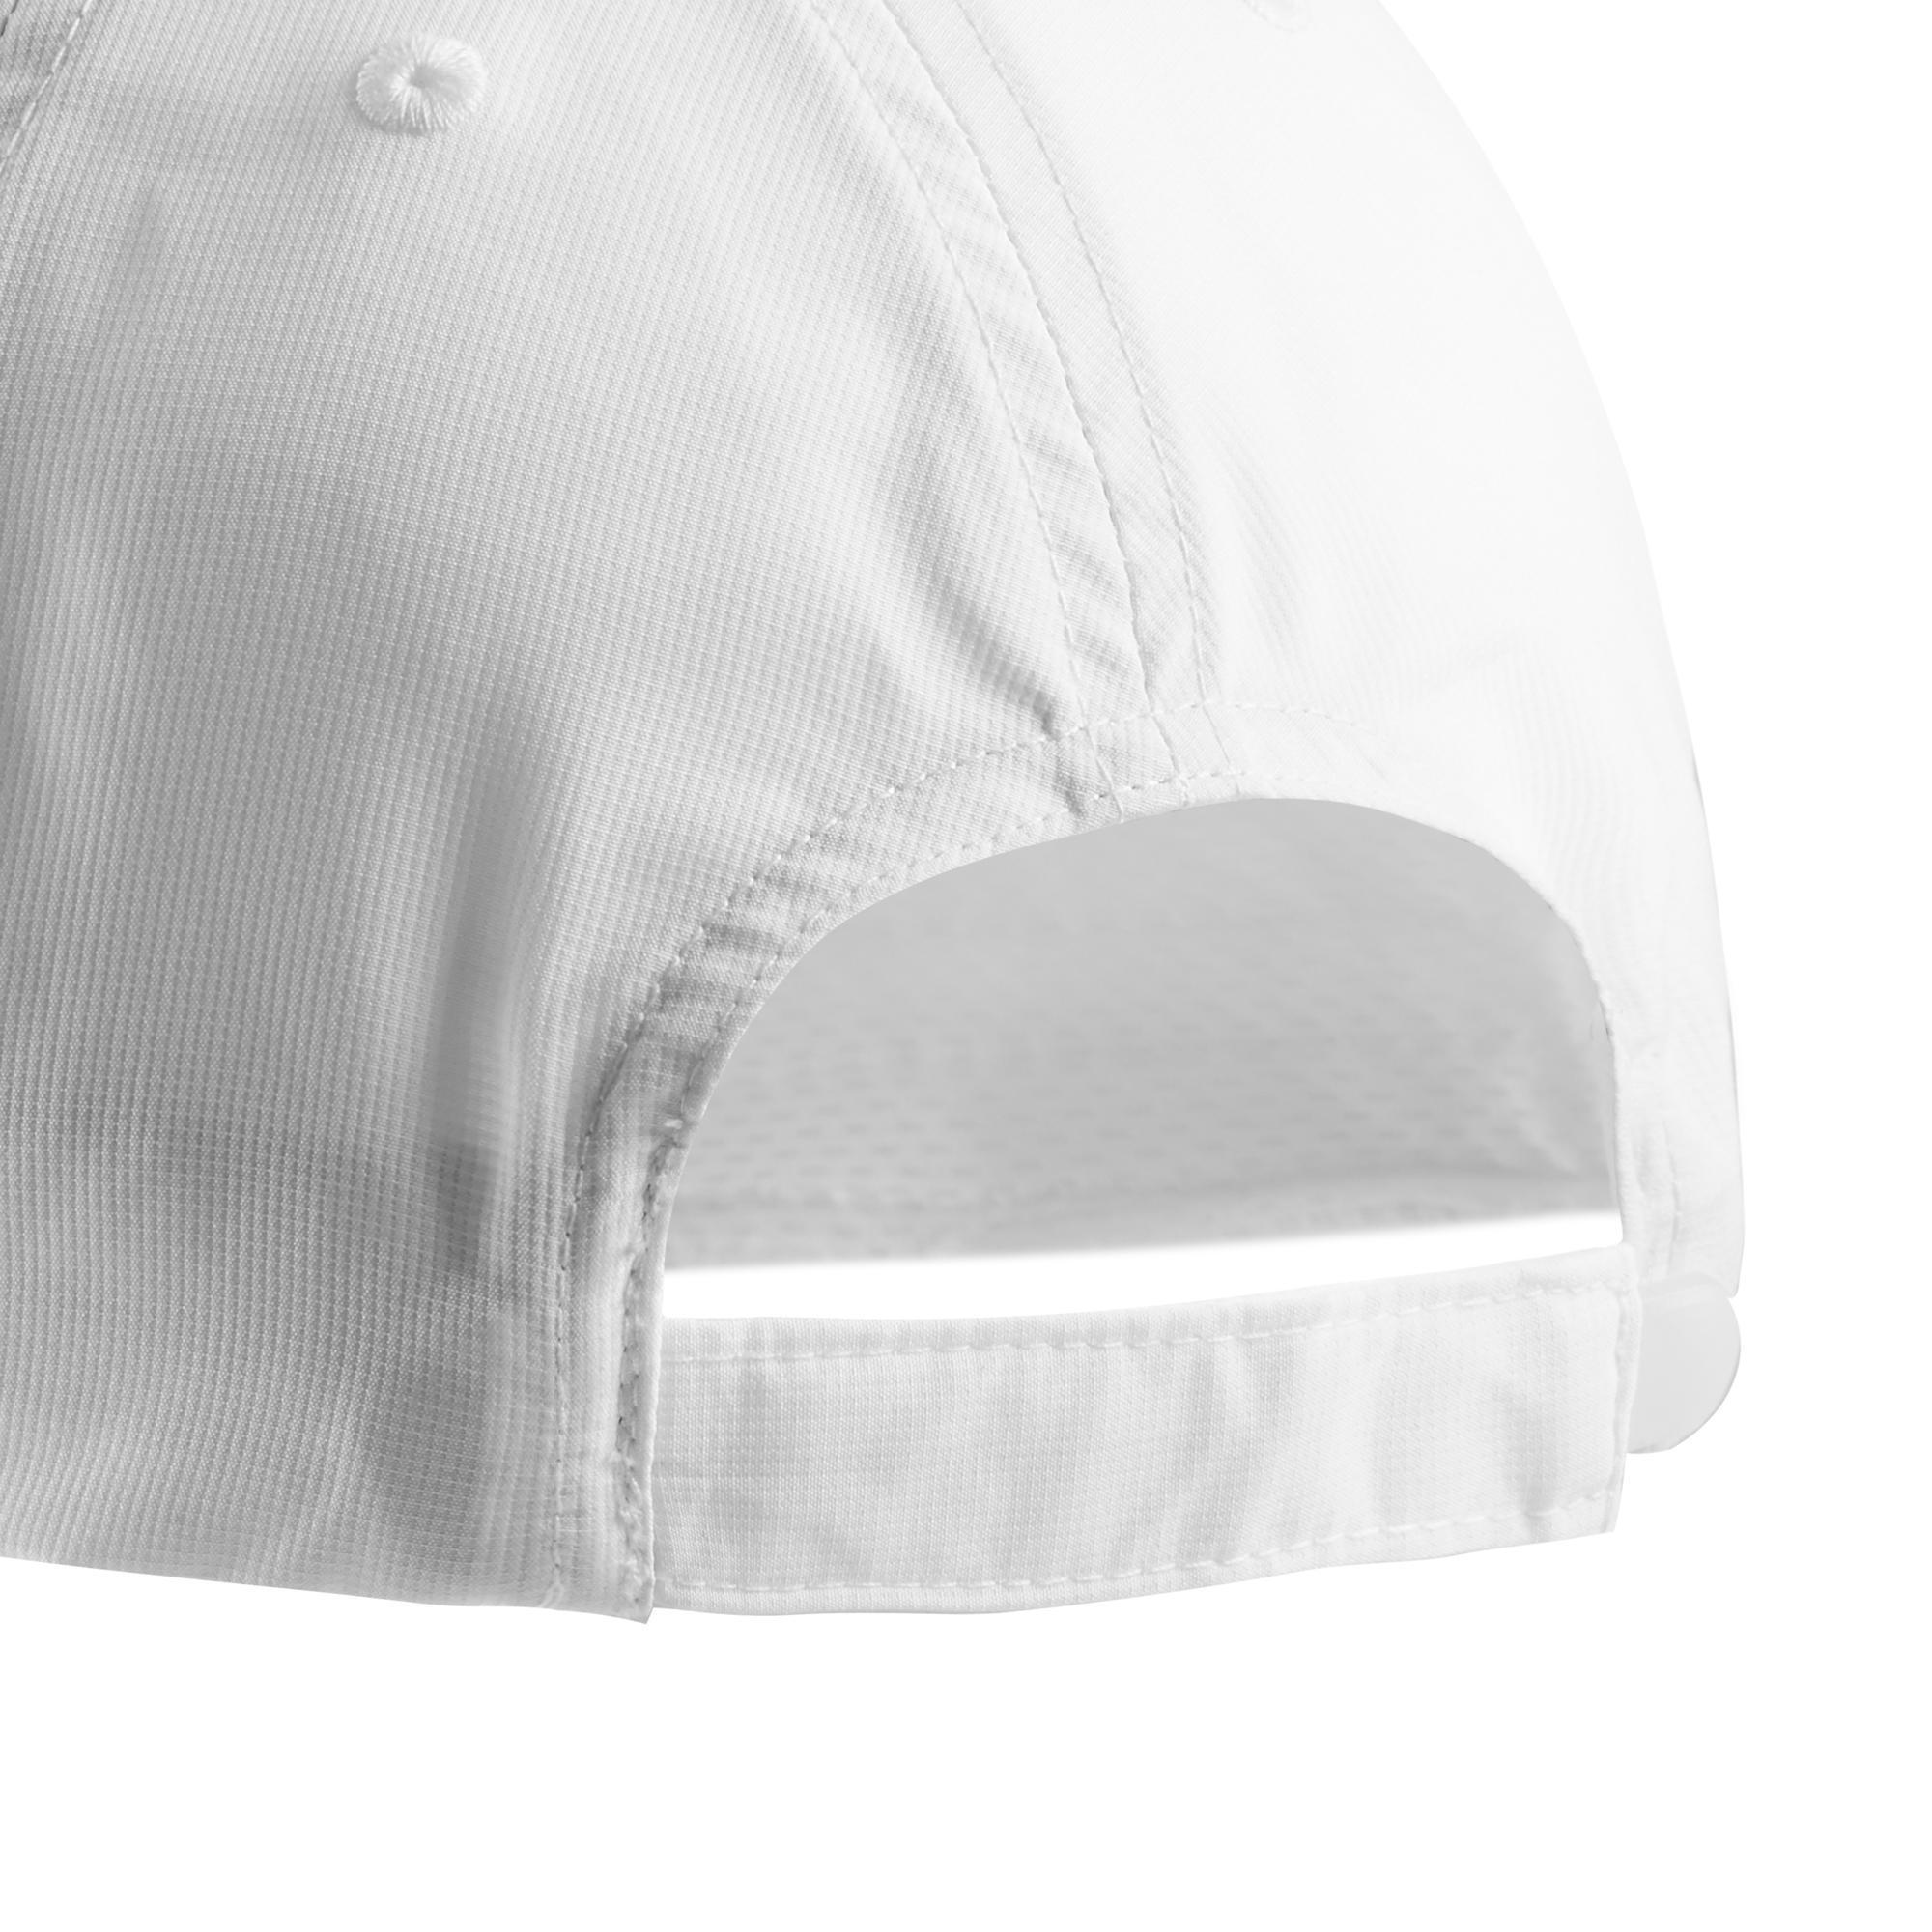 Adult's golf cap - WW 500 white 3/4